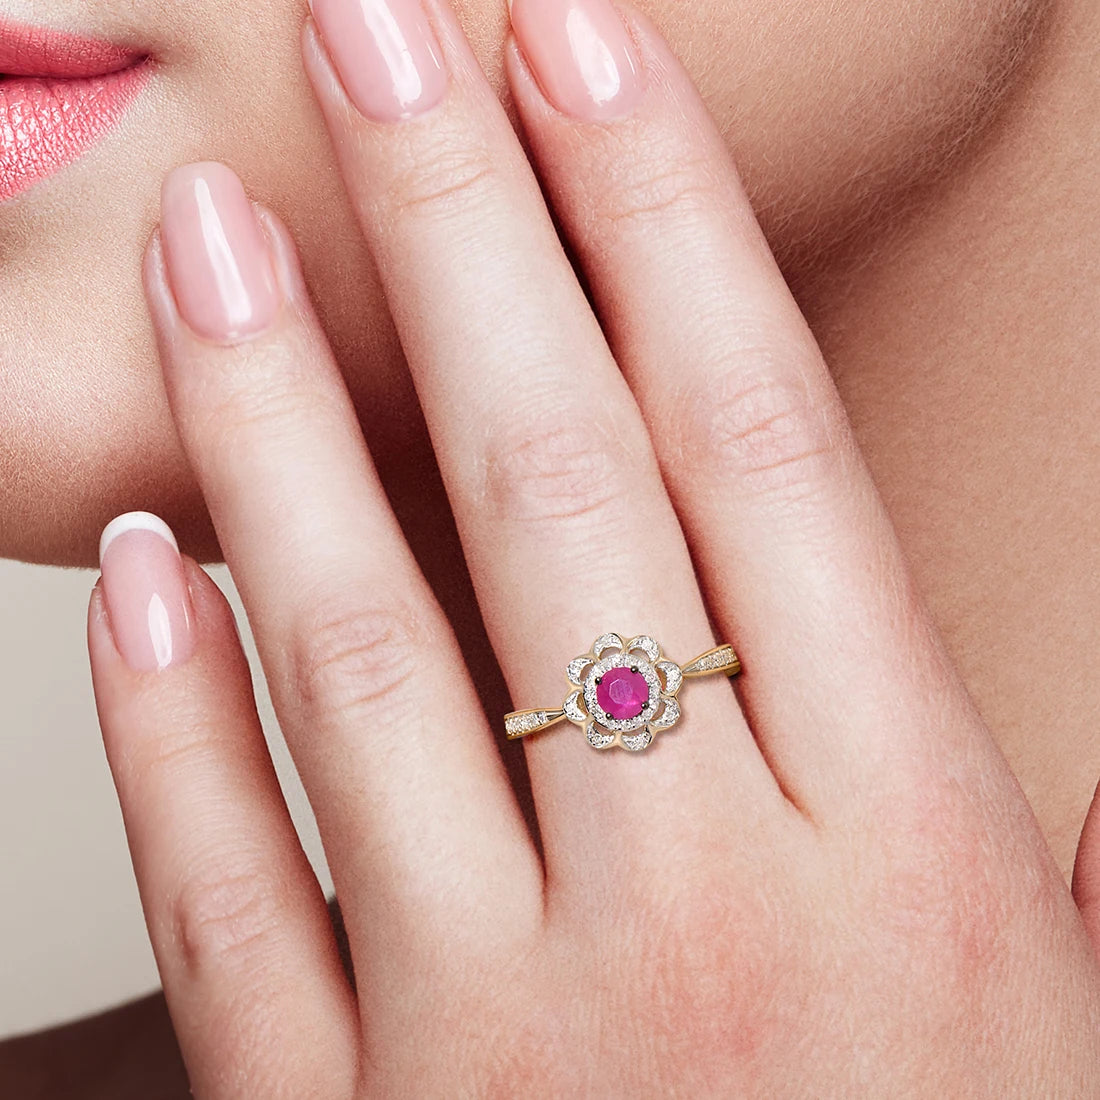 VISTOSO Genuine 14K 585 Yellow Gold Round Ruby Shiny Diamond Flower Ring For Lady Wedding Engagement Anniversary Fine Jewelry